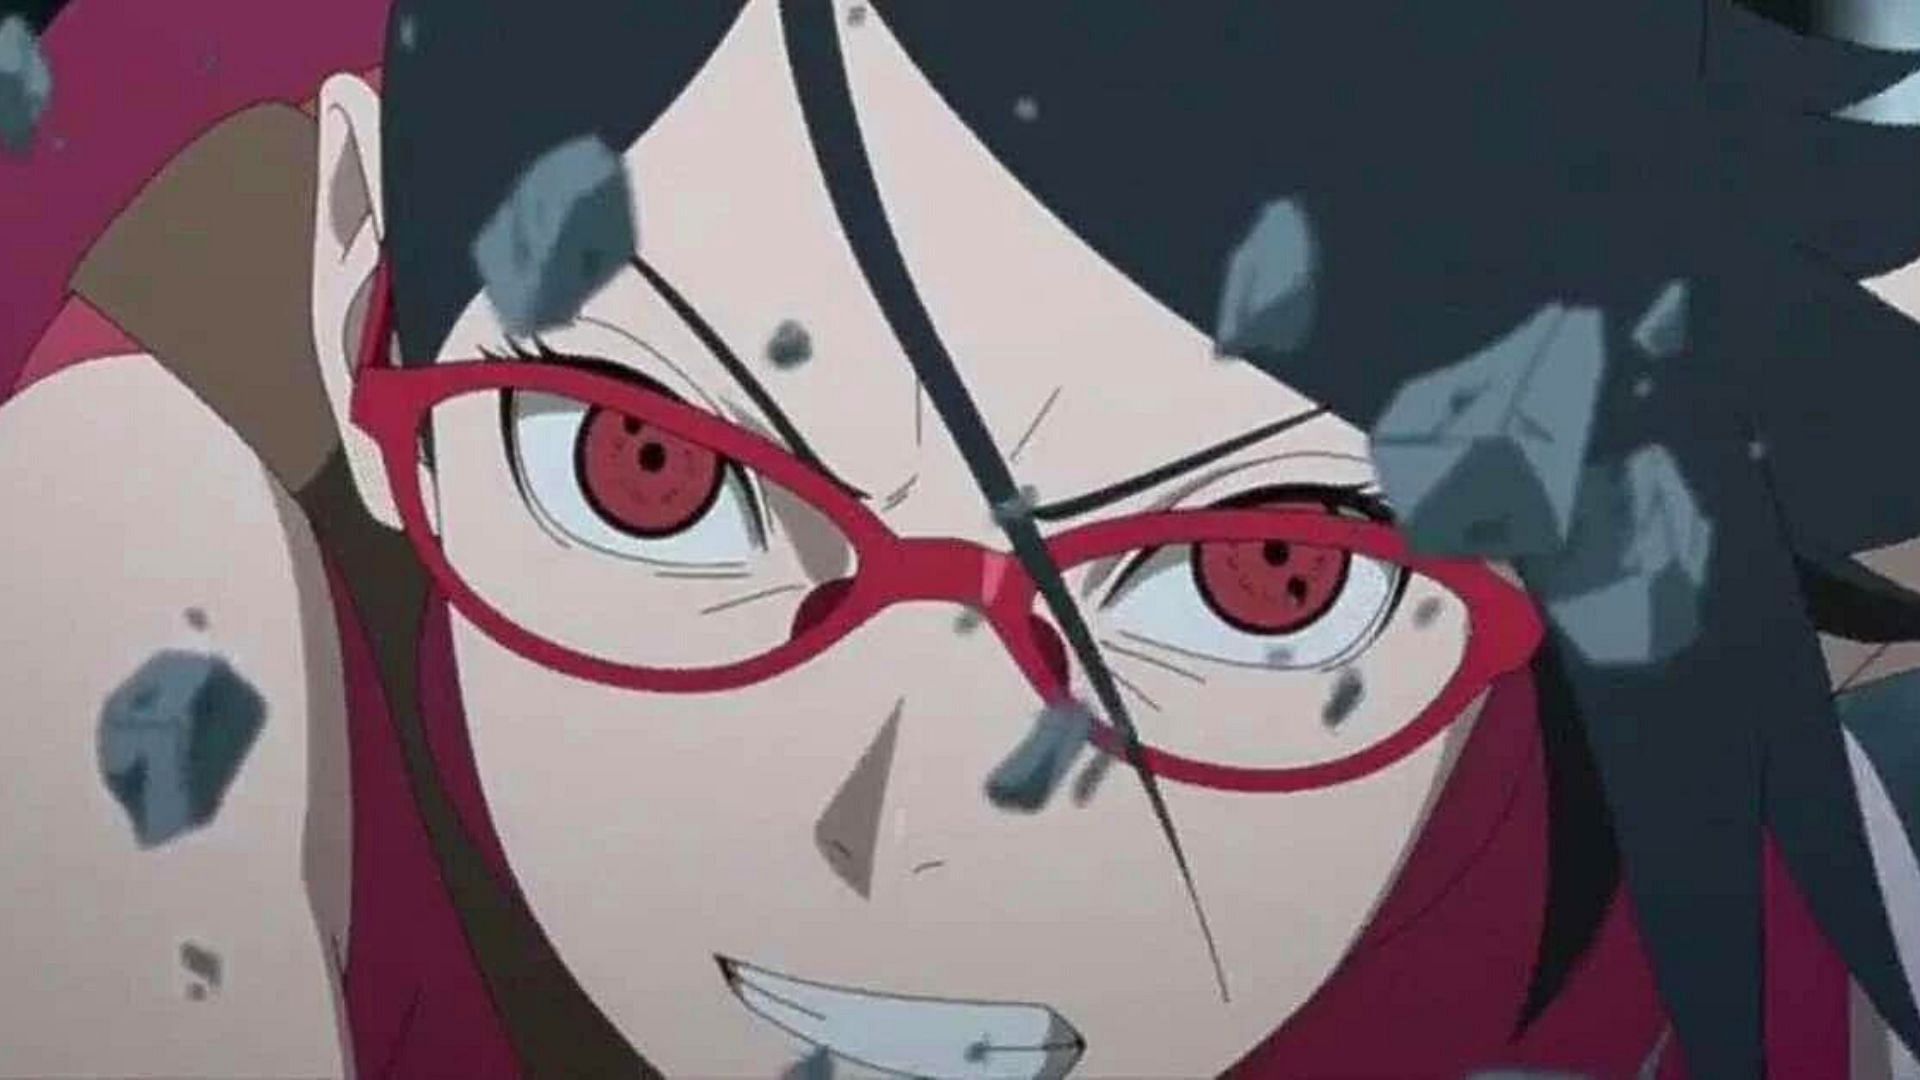 Sarada Uchiha as seen in Boruto: Naruto Next Generations